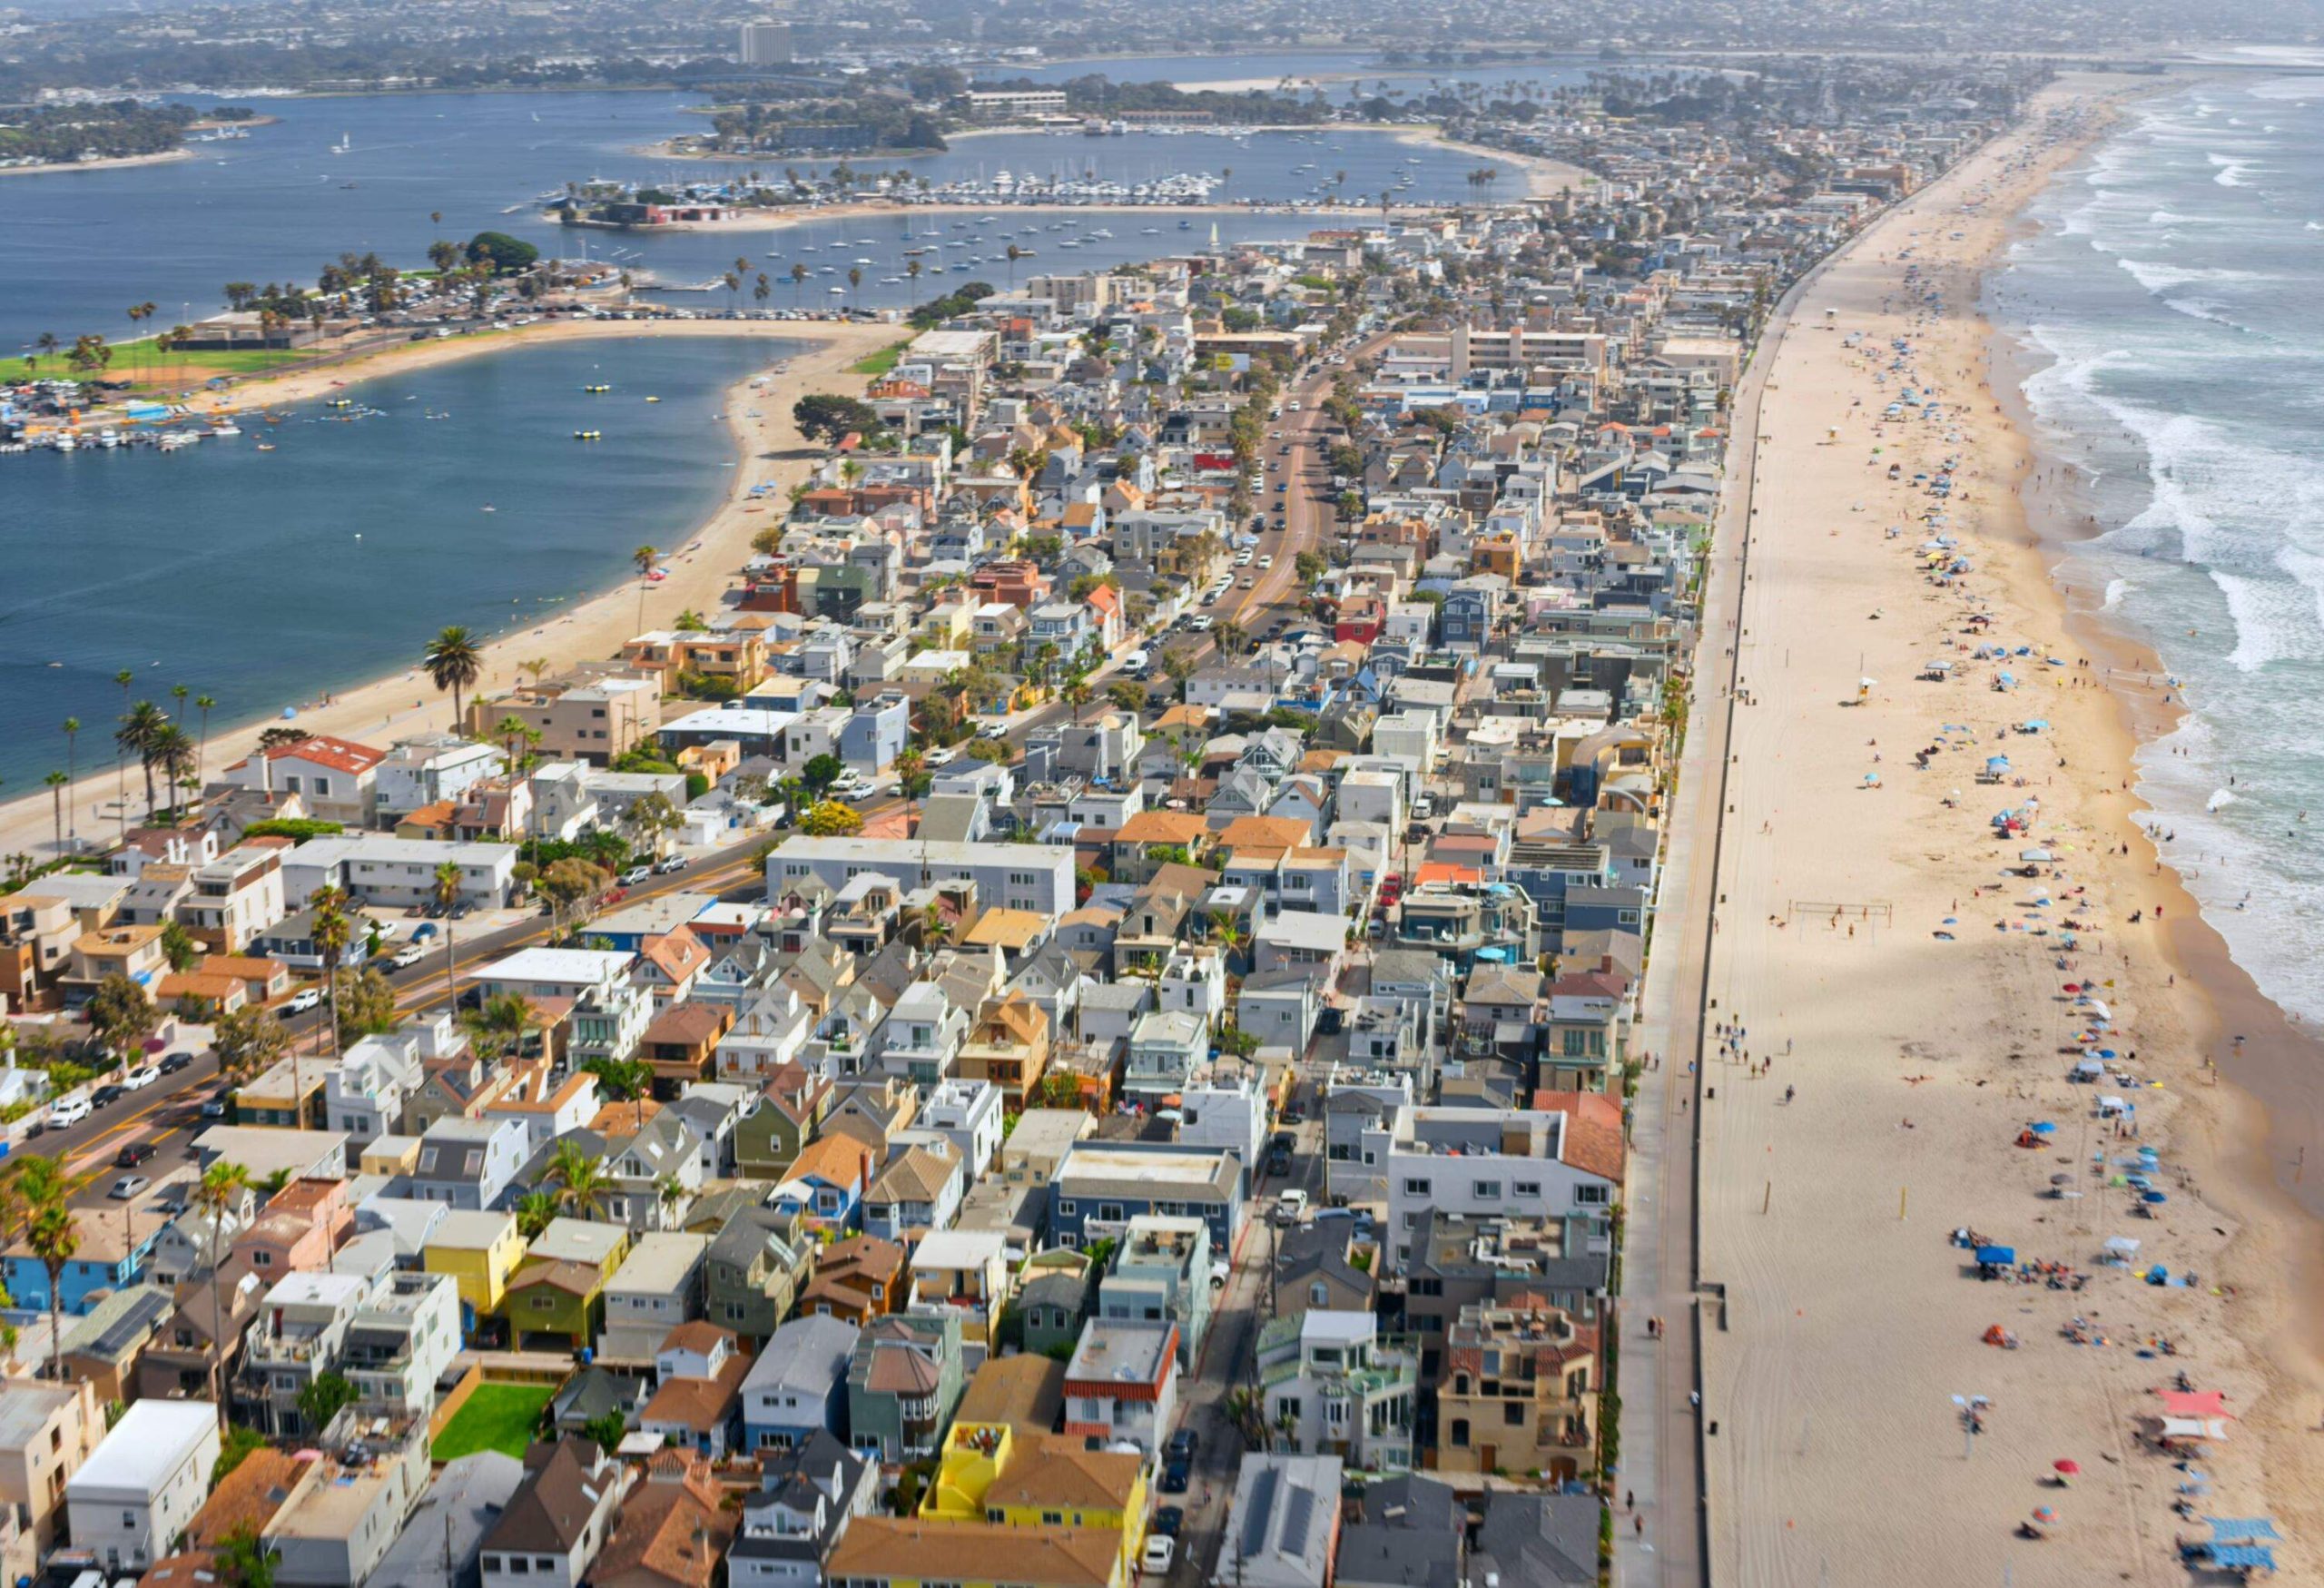 Aerial view of residential buildings near Mission Beach, San Diego, California, USA.